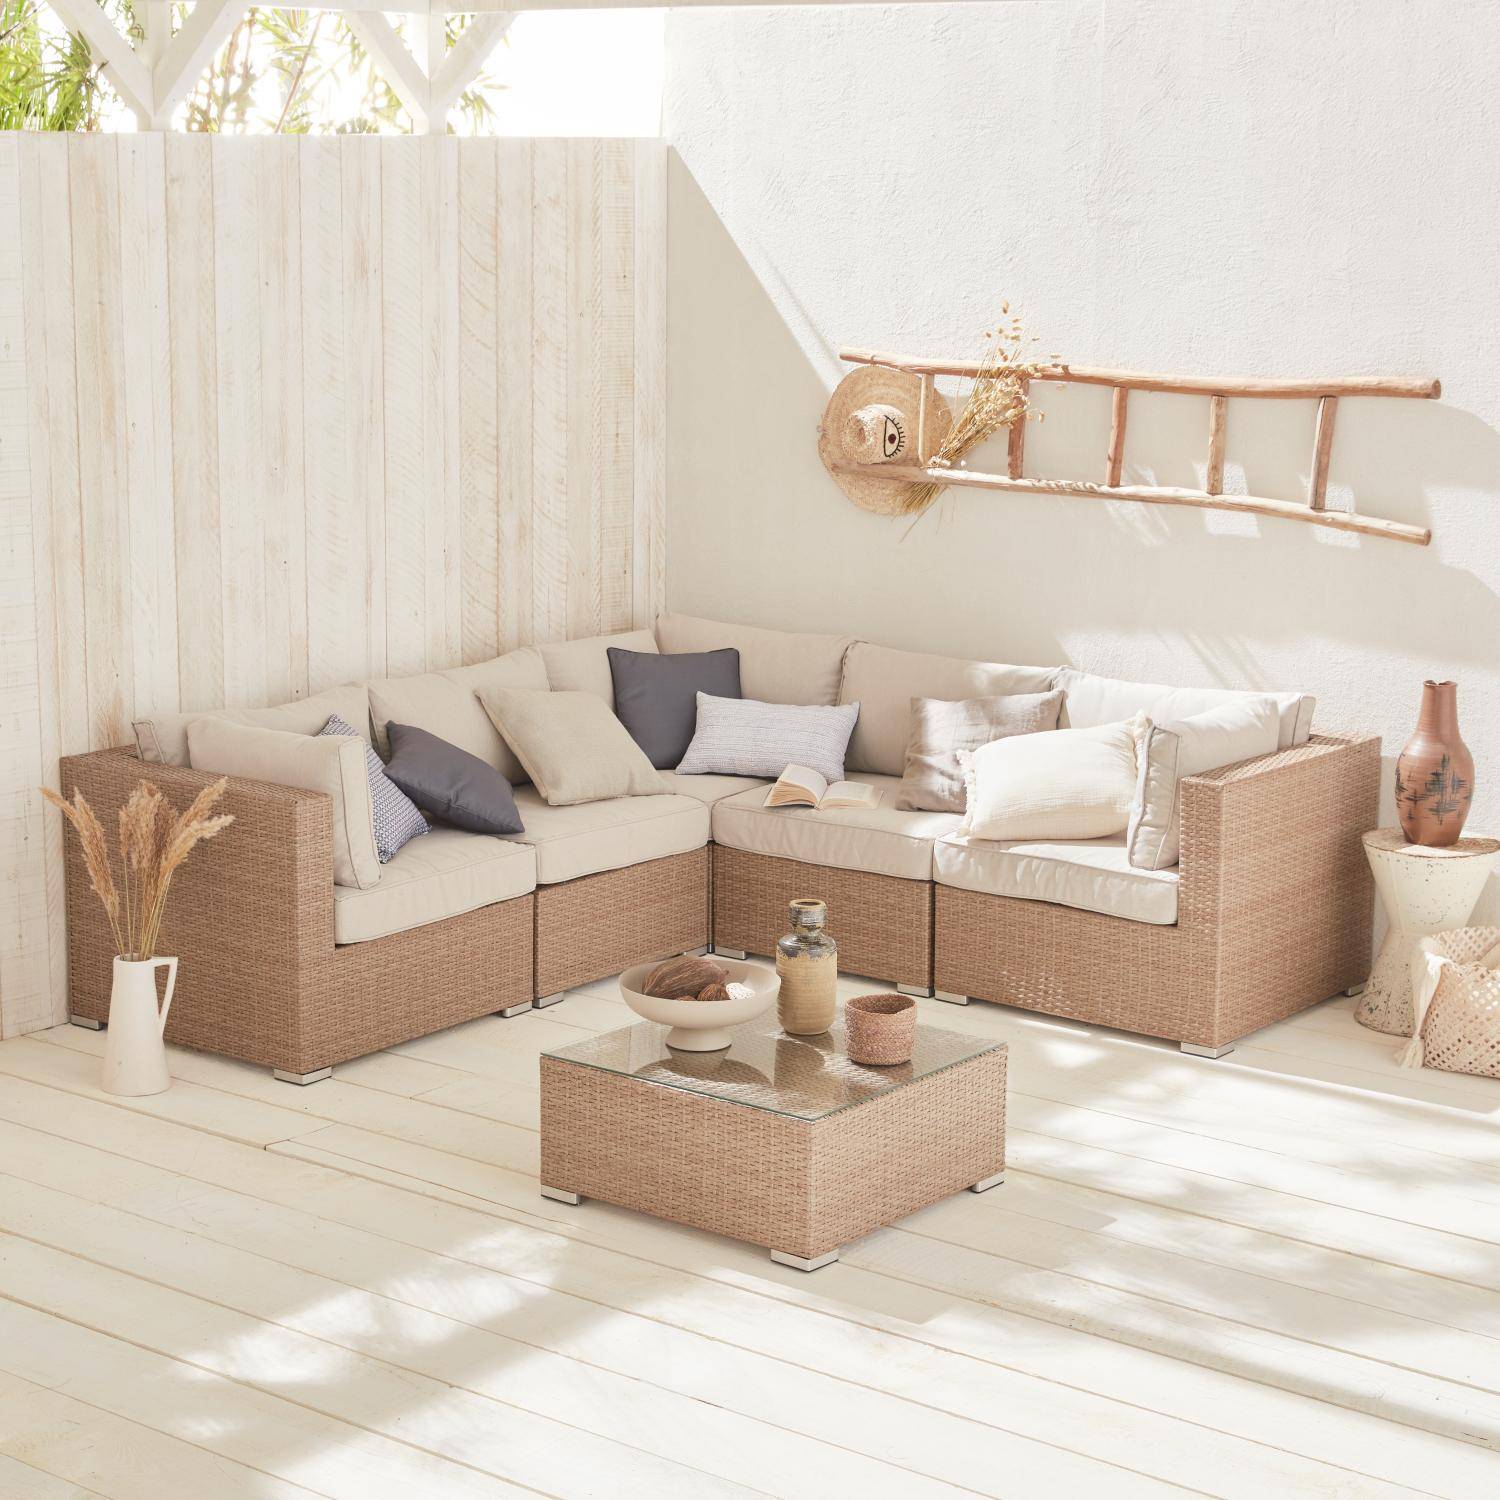 Ready assembled 5-seater polyrattan corner garden sofa set with coffee table, Napoli. Beige,sweeek,Photo1